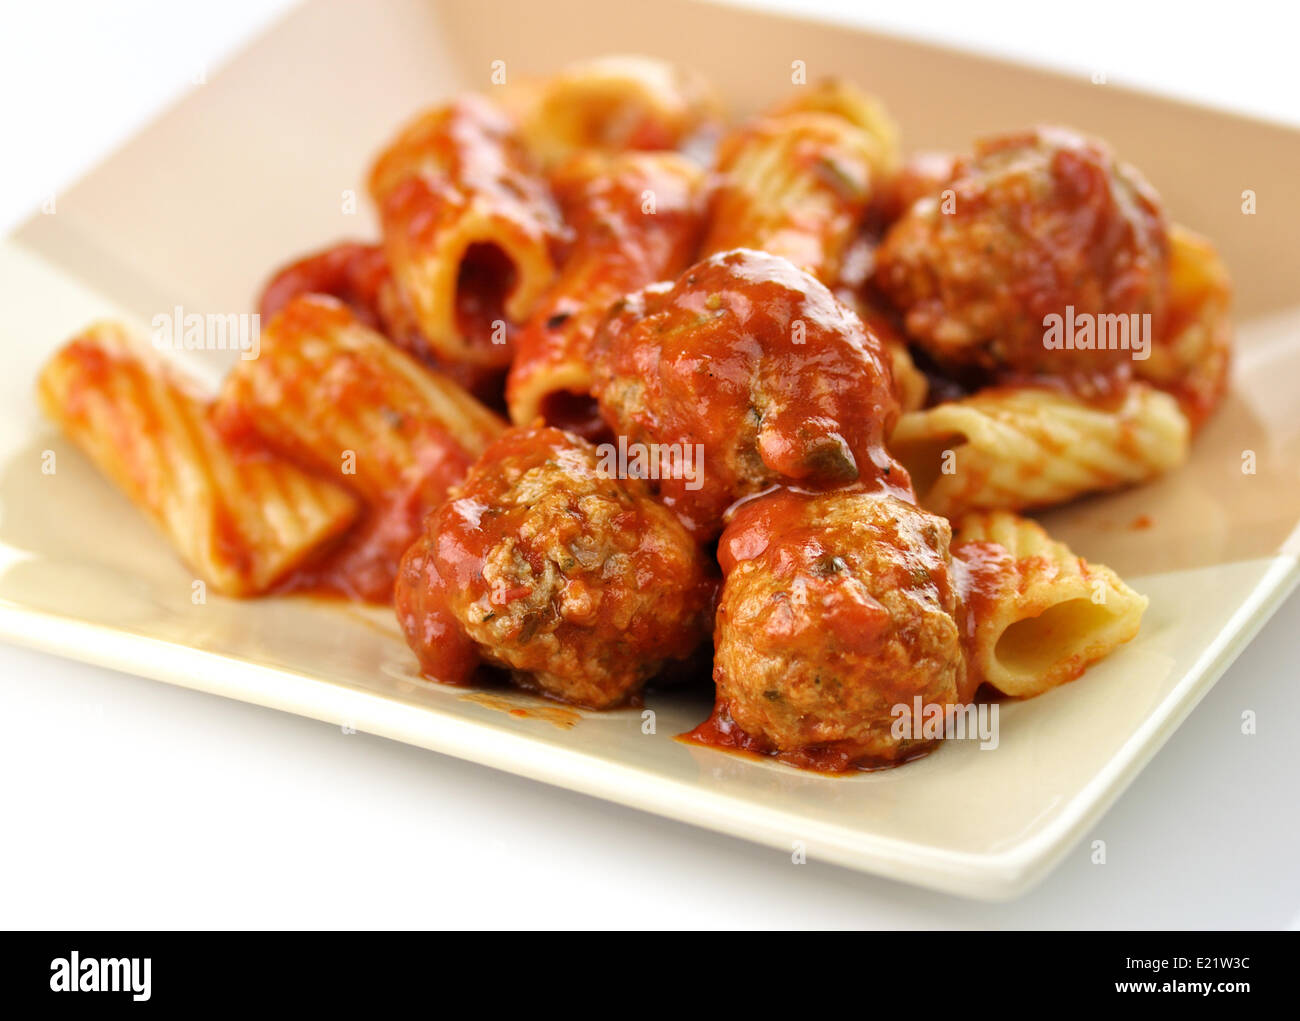 Rigatoni with tomato sauce and meatballs. Stock Photo